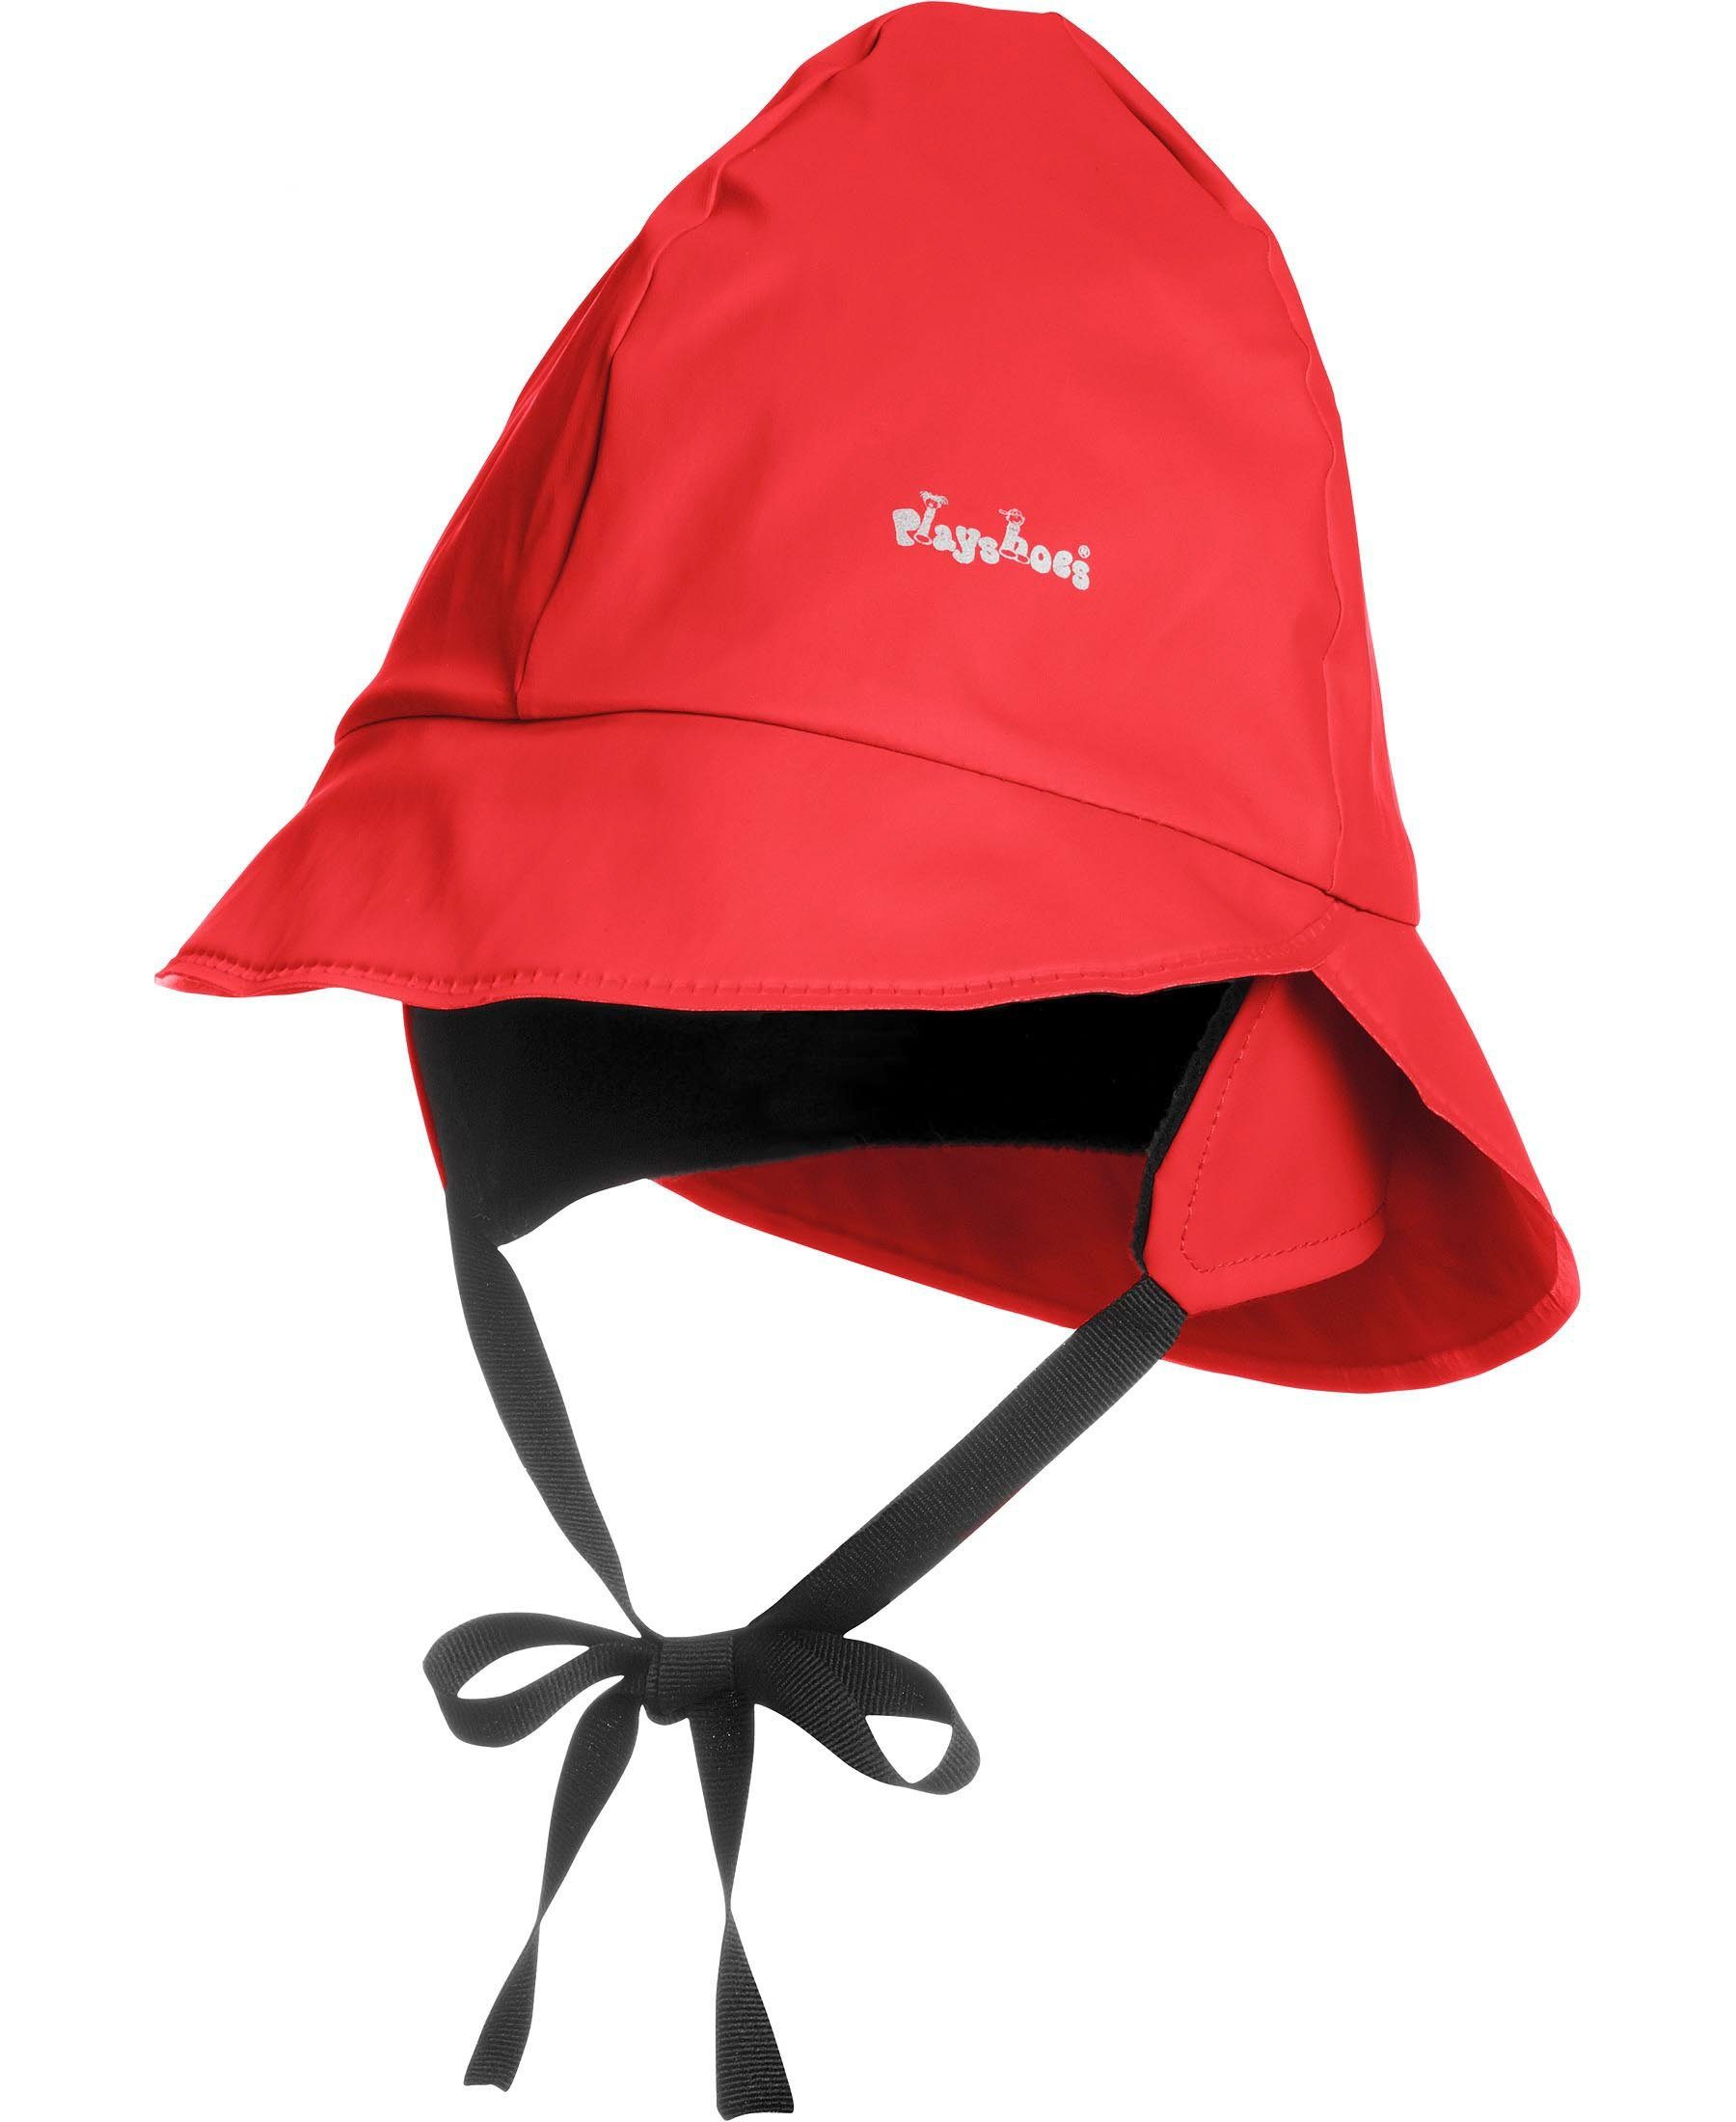 Einkaufszentrum Playshoes Schirmmütze Regenmütze, Fleecefutter Rot